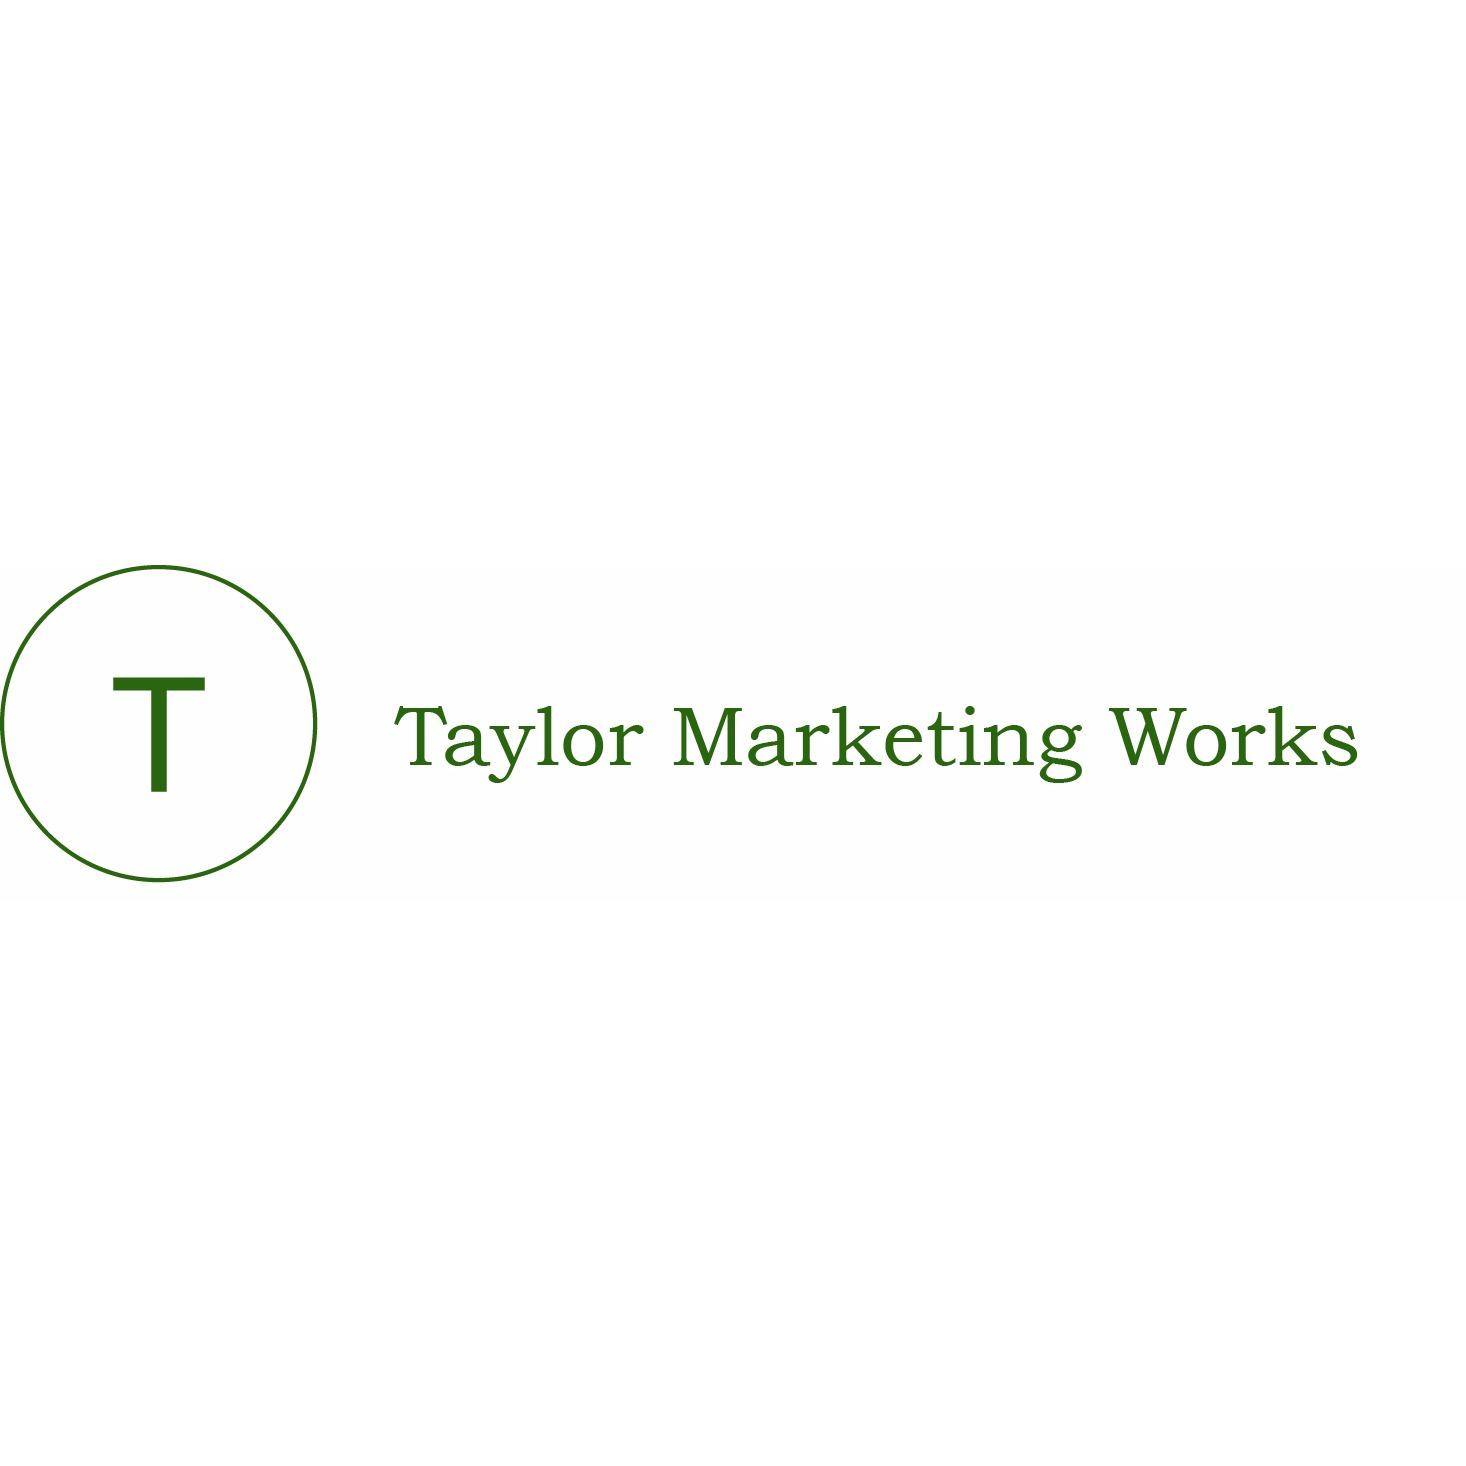 Taylor Marketing Works